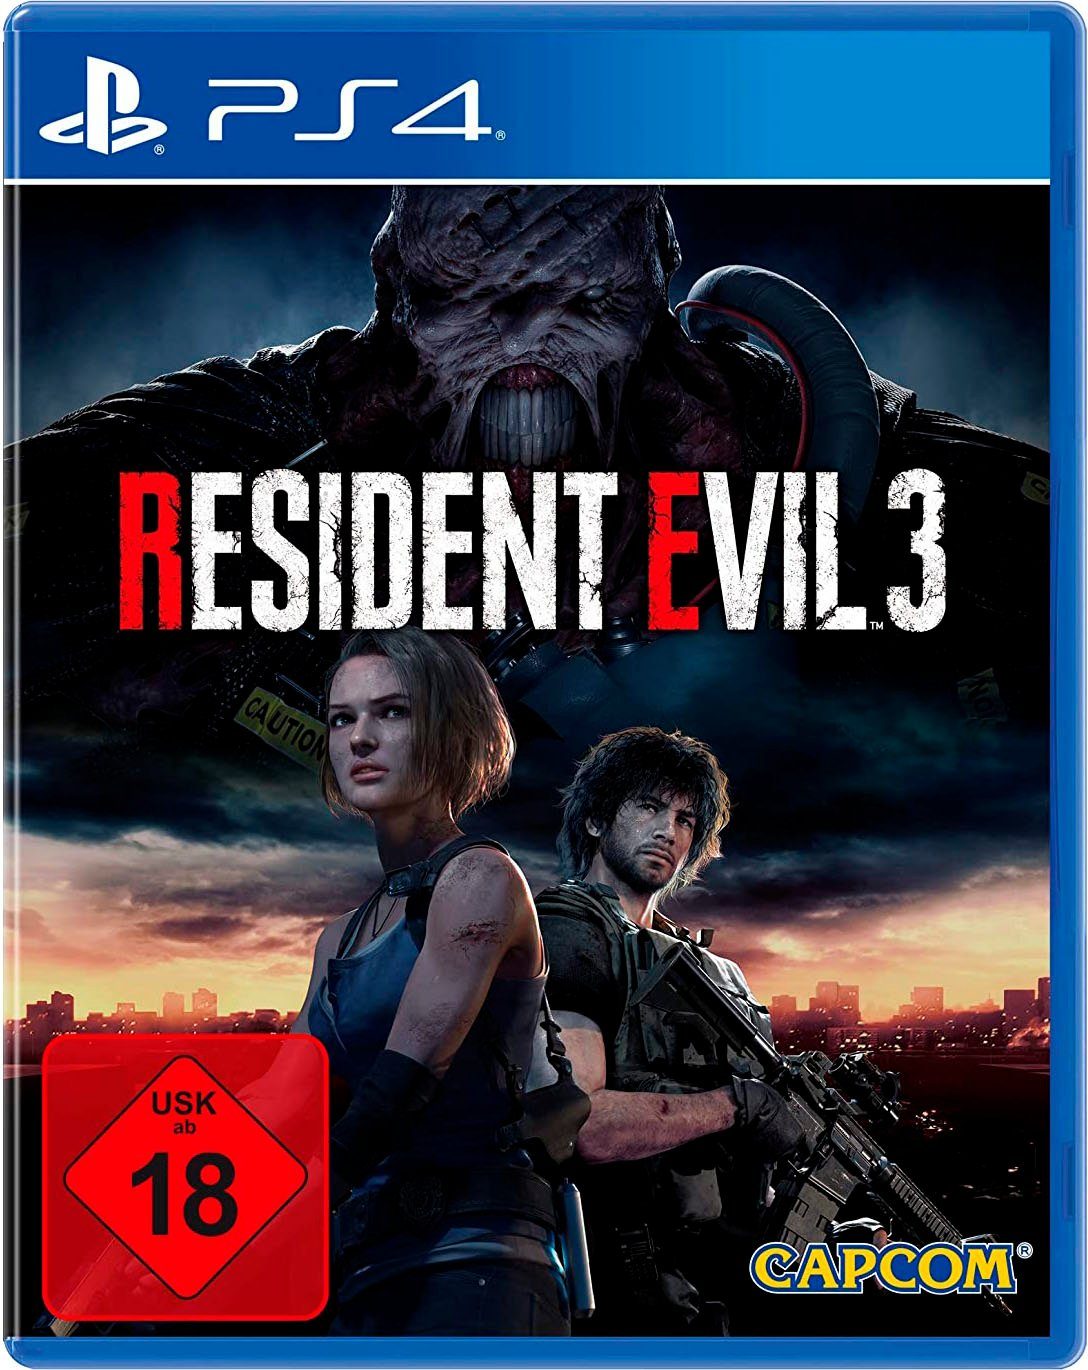 Evil Resident PlayStation 3 Capcom PS4 4